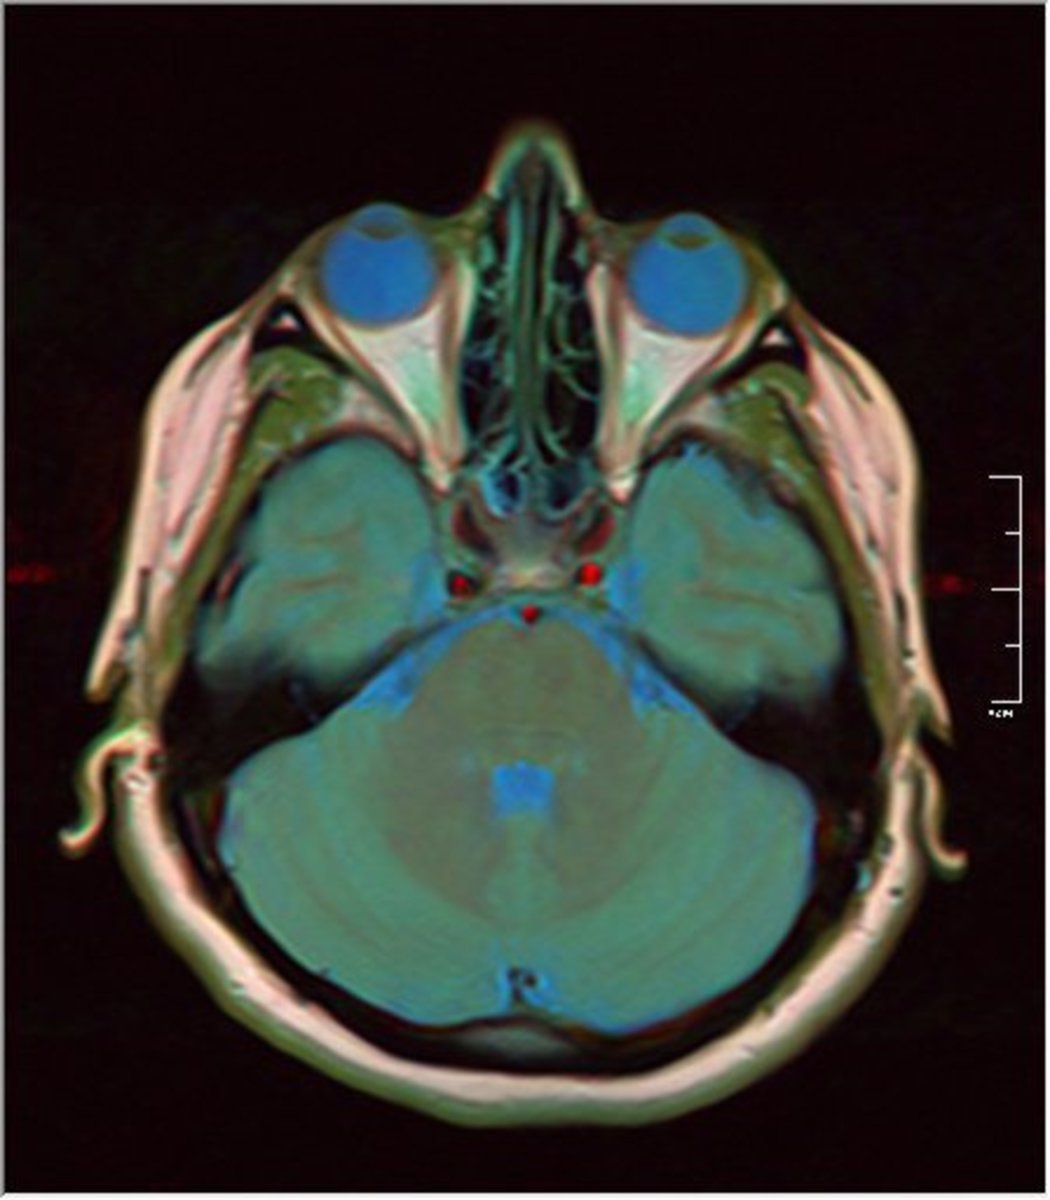 MRI of the Brain